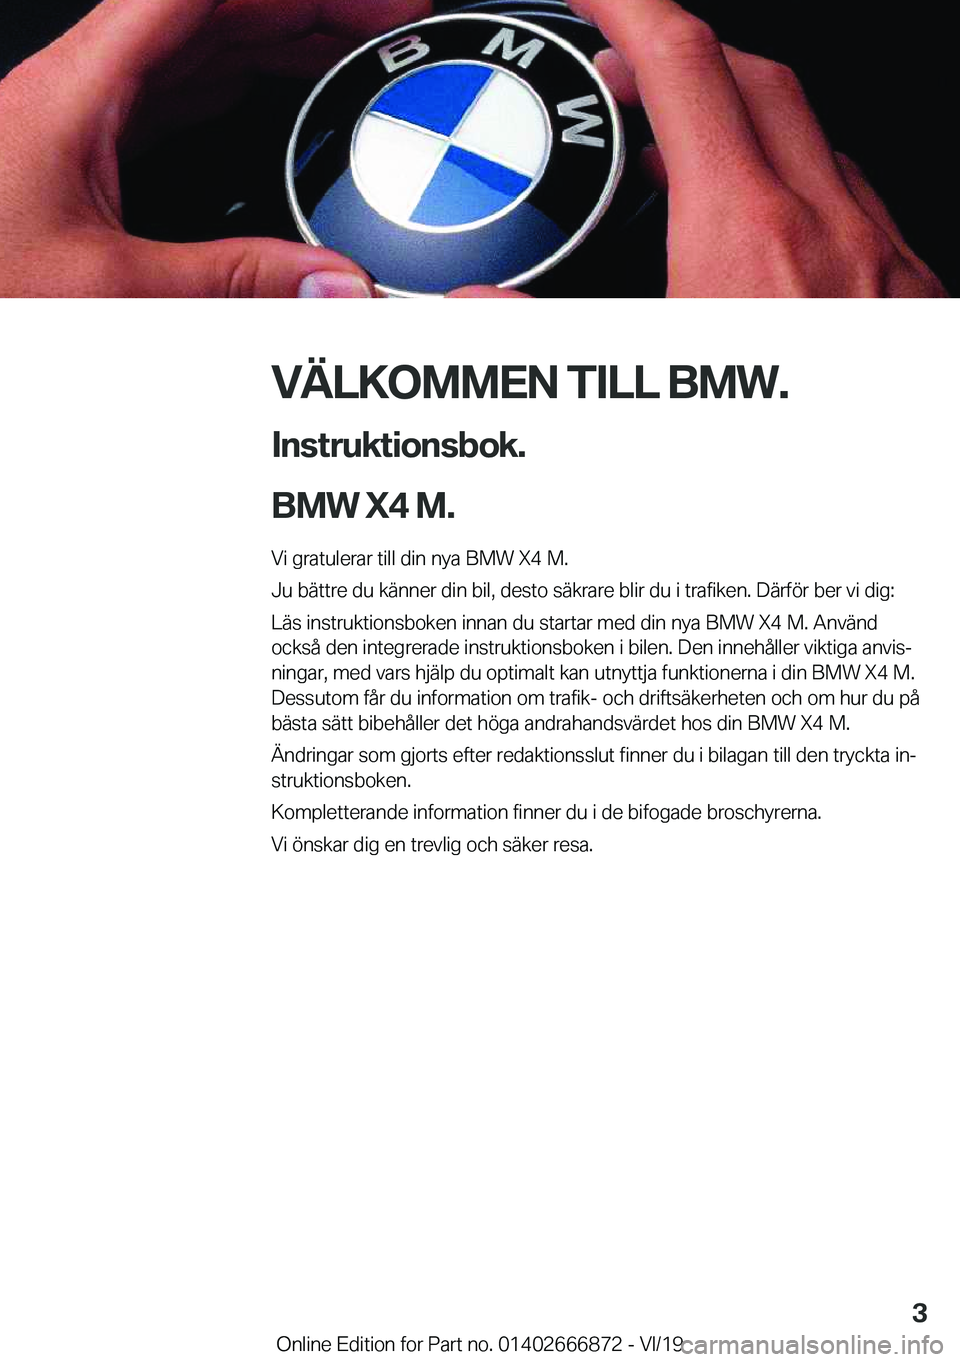 BMW X4 M 2020  InstruktionsbÖcker (in Swedish) �V�Ä�L�K�O�M�M�E�N��T�I�L�L��B�M�W�.�I�n�s�t�r�u�k�t�i�o�n�s�b�o�k�.
�B�M�W��X�4��M�.
�V�i��g�r�a�t�u�l�e�r�a�r��t�i�l�l��d�i�n��n�y�a��B�M�W��X�4��M�.
�J�u��b�ä�t�t�r�e��d�u��k�ä�n�n